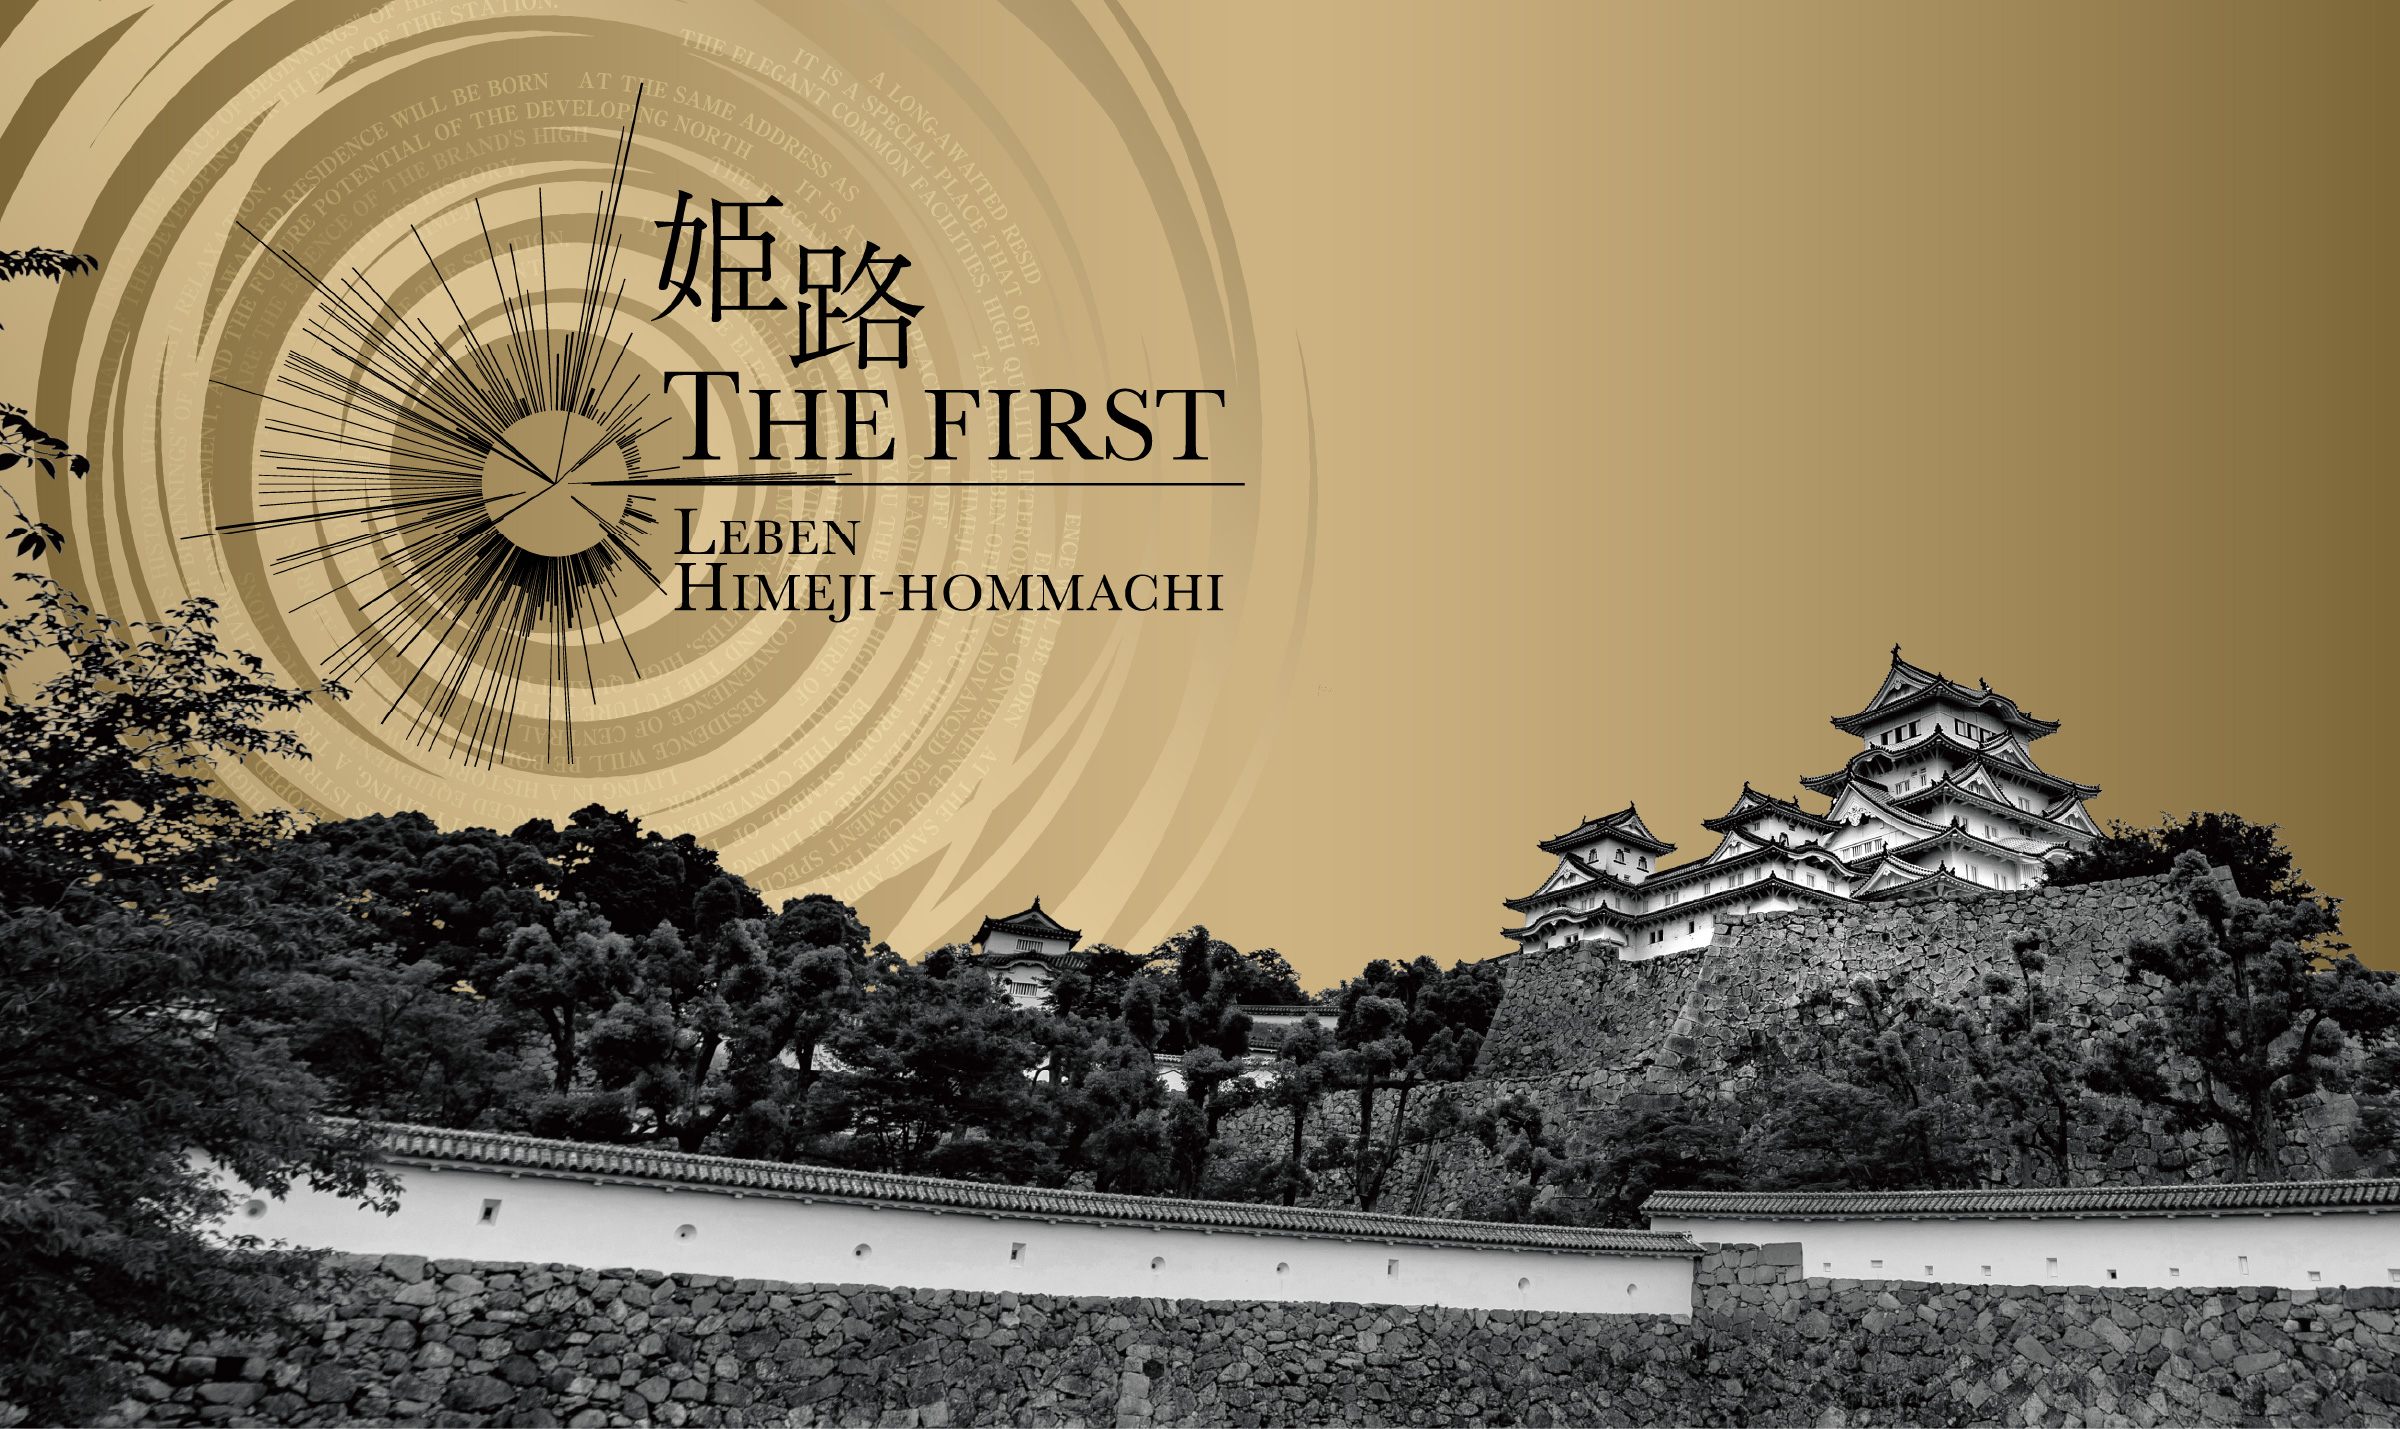 姫路 THE FIRST